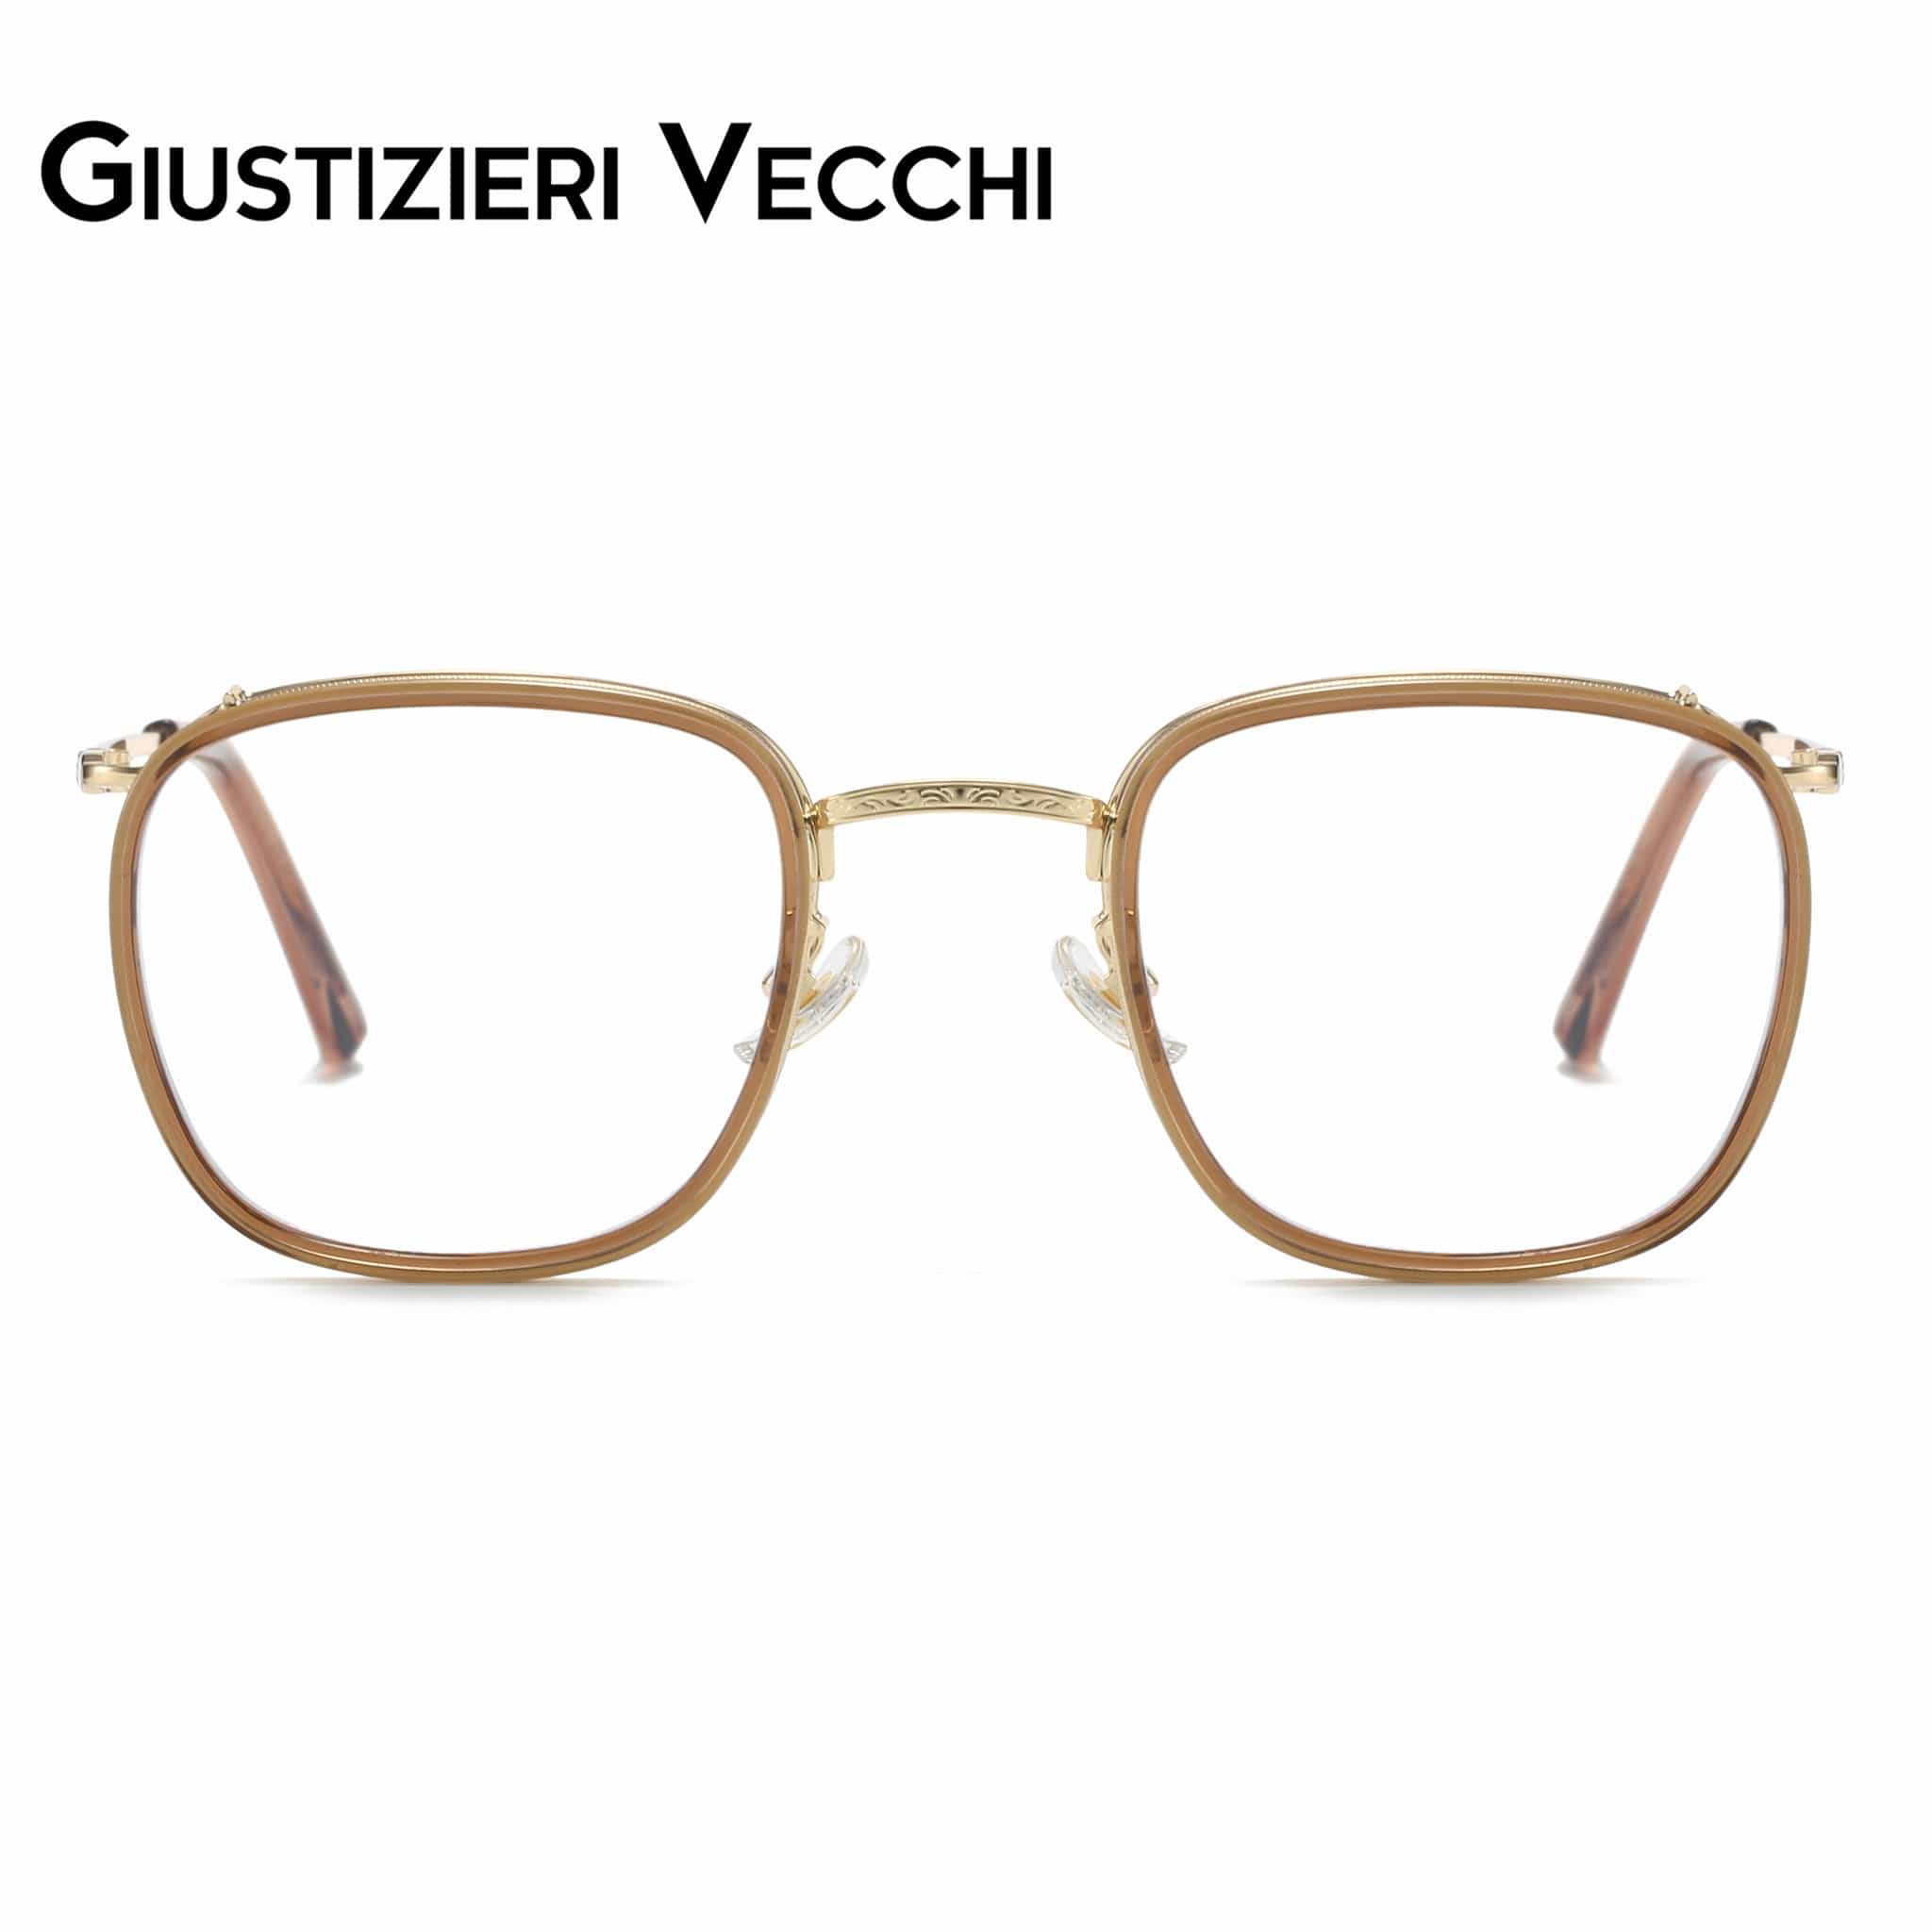 GIUSTIZIERI VECCHI Eyeglasses Small / Golden Brown Tortoise Starry Night Duo